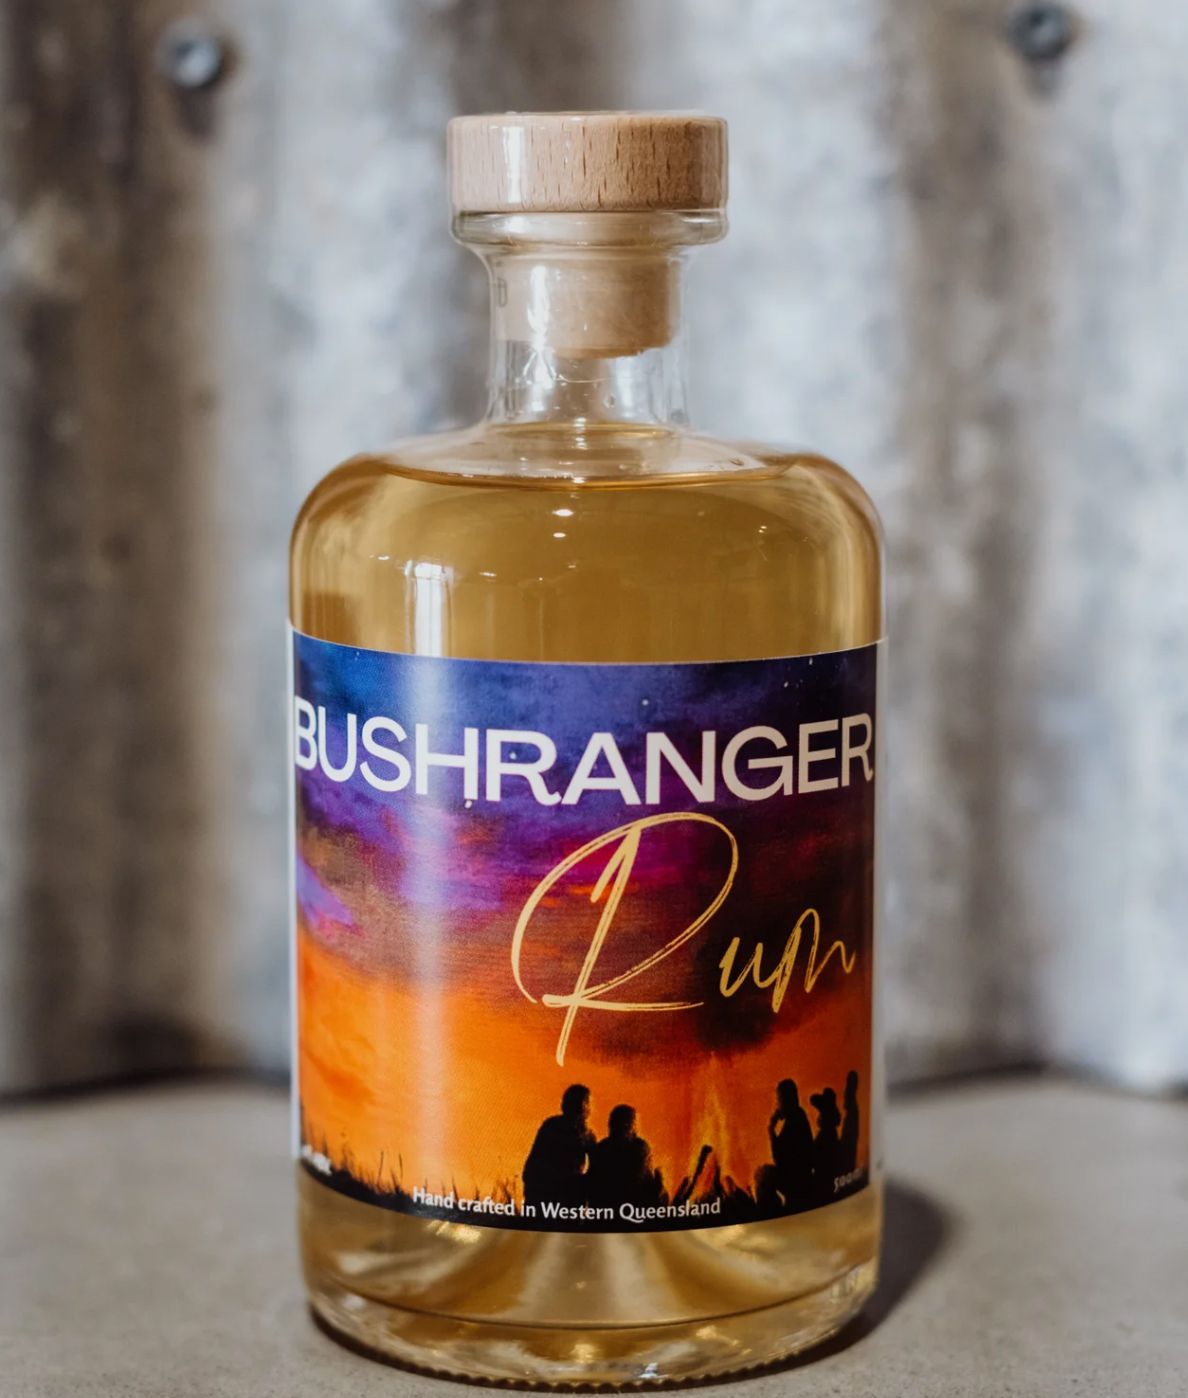 a bottle of bushranger rum is sitting on a concrete surface .